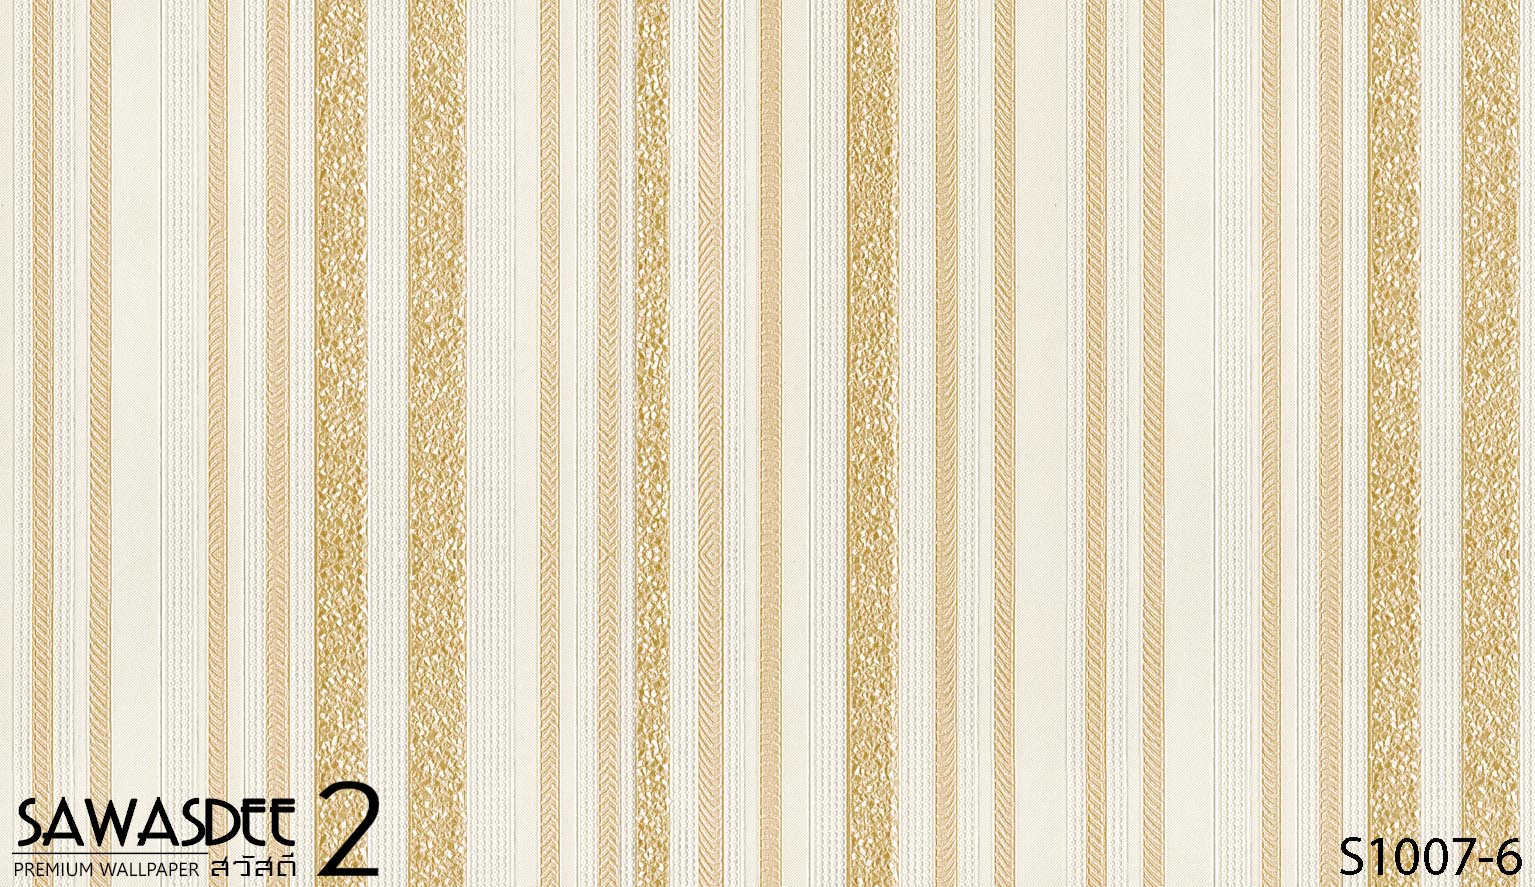 Wallpaper (SAWASDEE 2) S1007-6